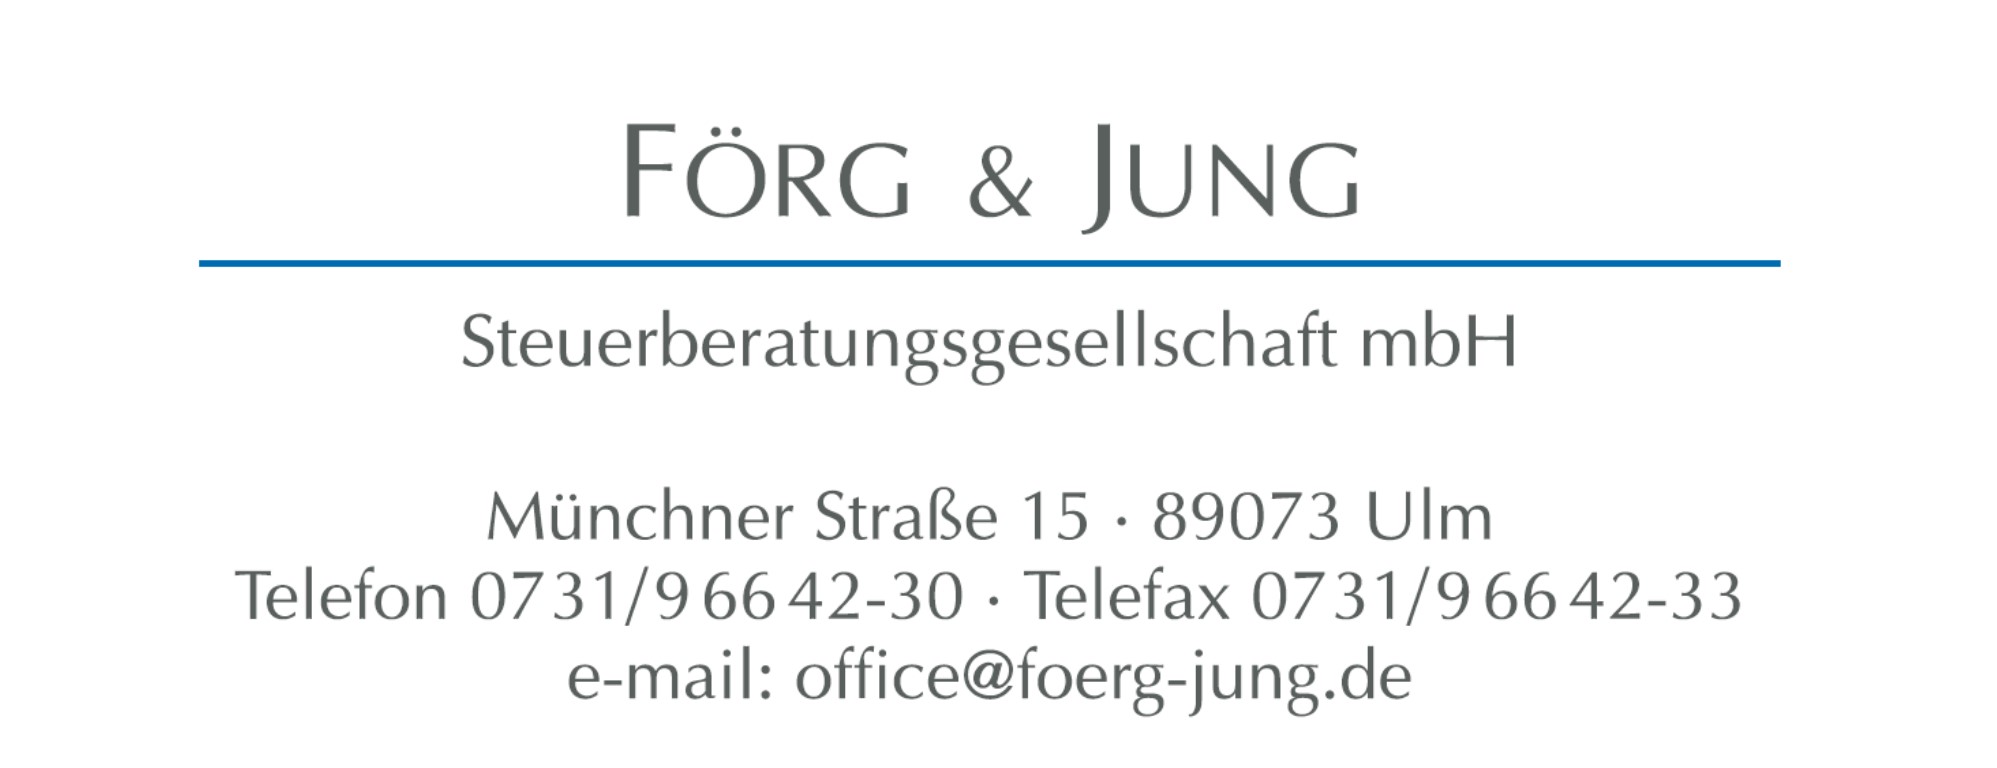 Bild 2 Förg & Jung Steuerberatungsgesellschaft mbH in Ulm